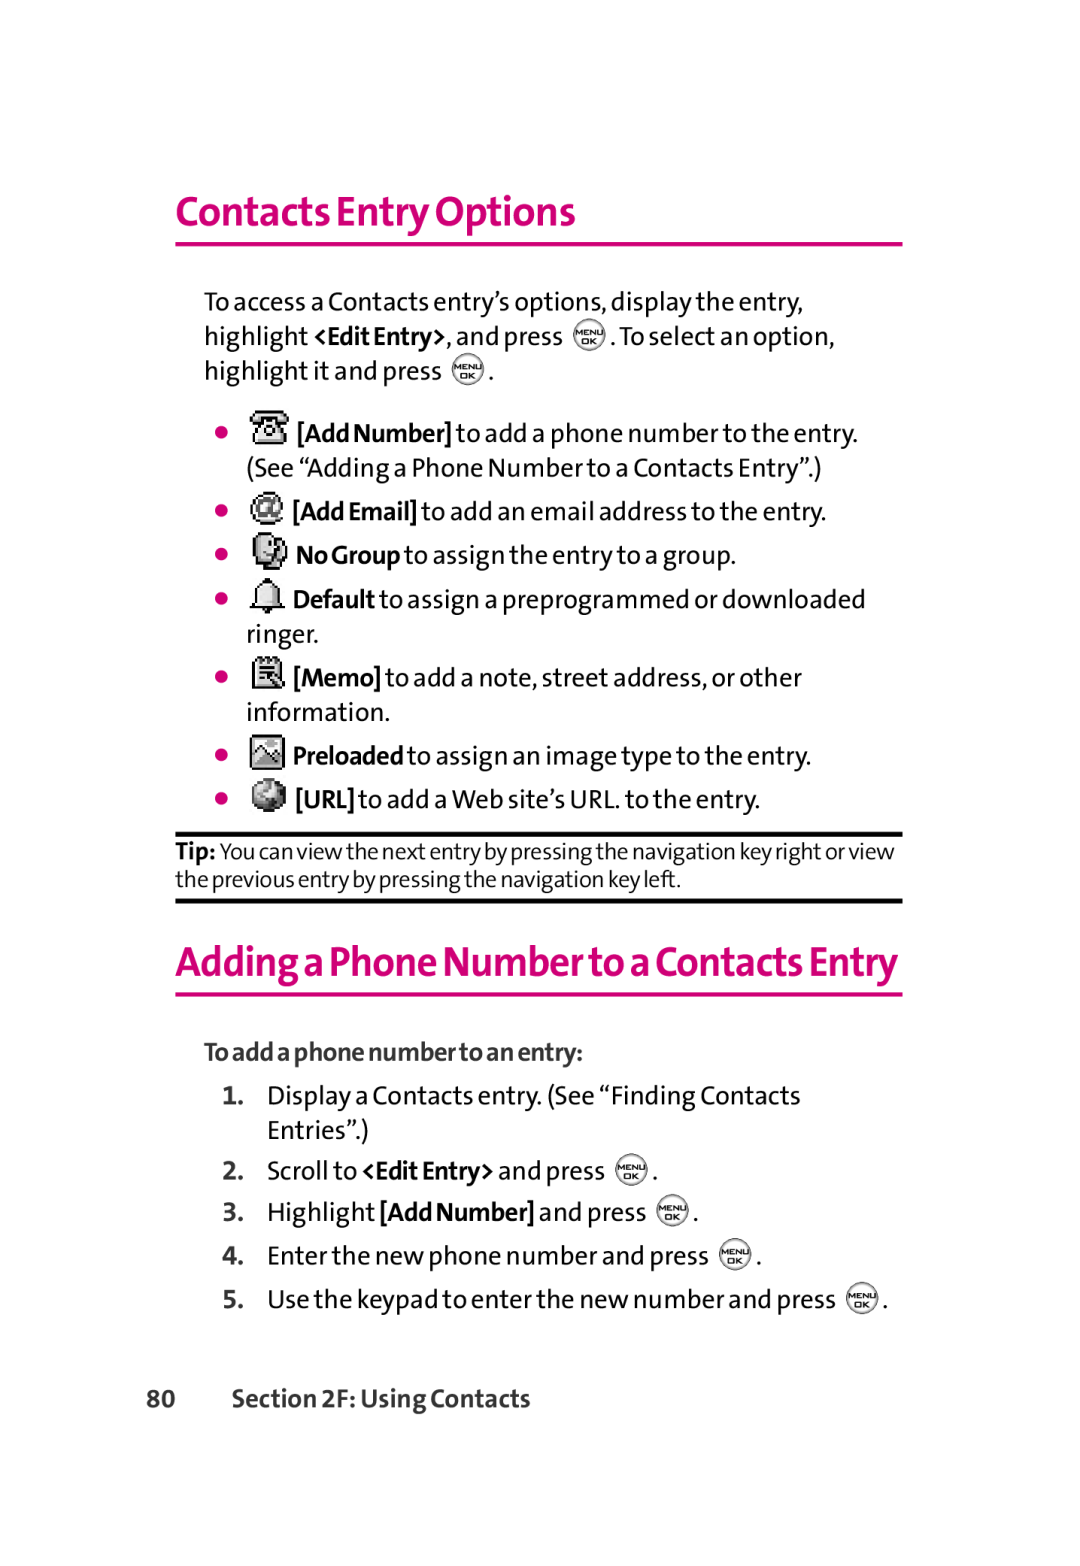 LG Electronics 350 manual Contacts Entry Options, AddingaPhoneNumbertoaContactsEntry, Toaddaphonenumbertoanentry 